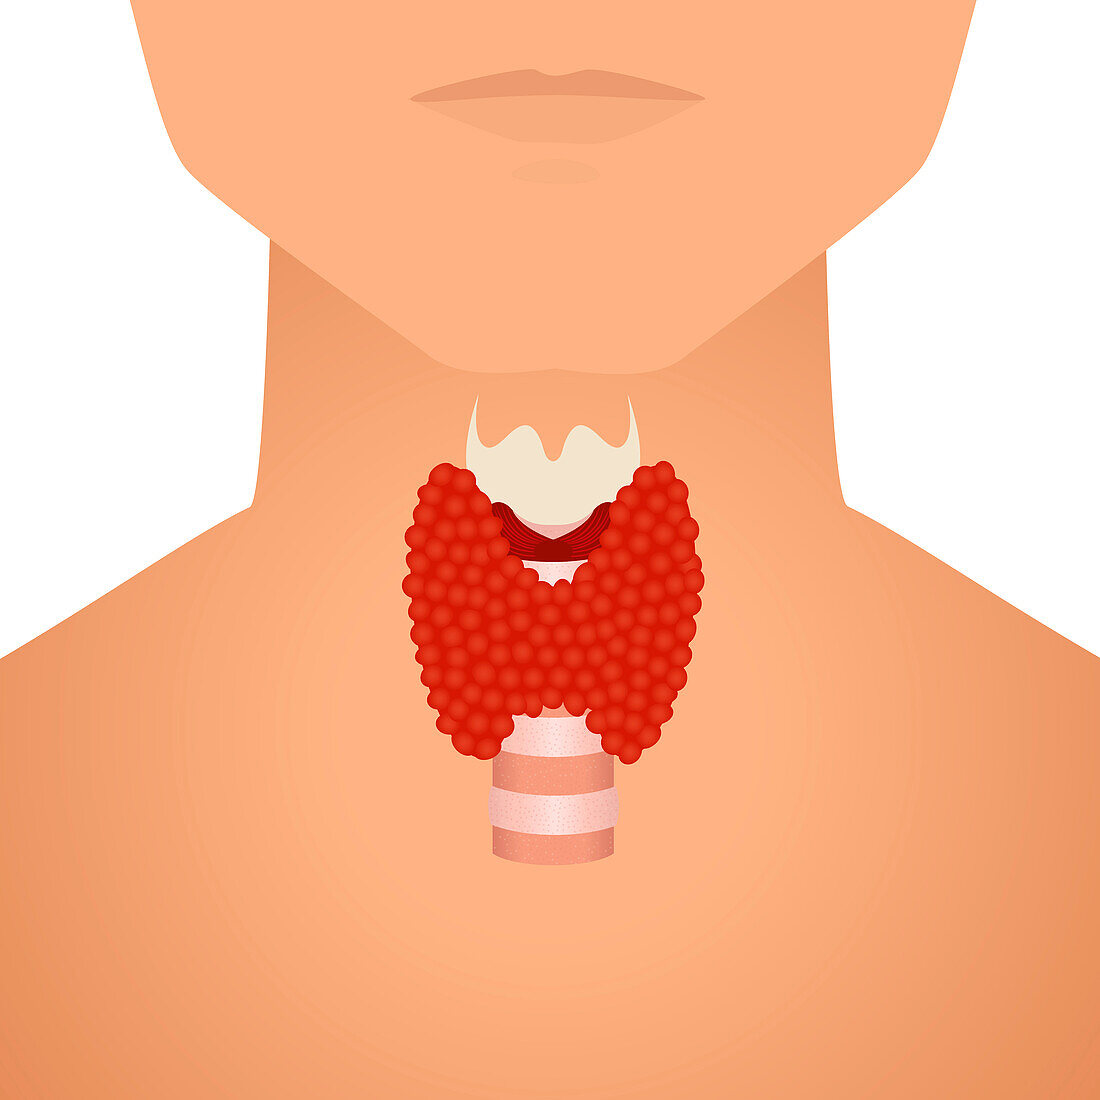 Thyroid in men, conceptual illustration